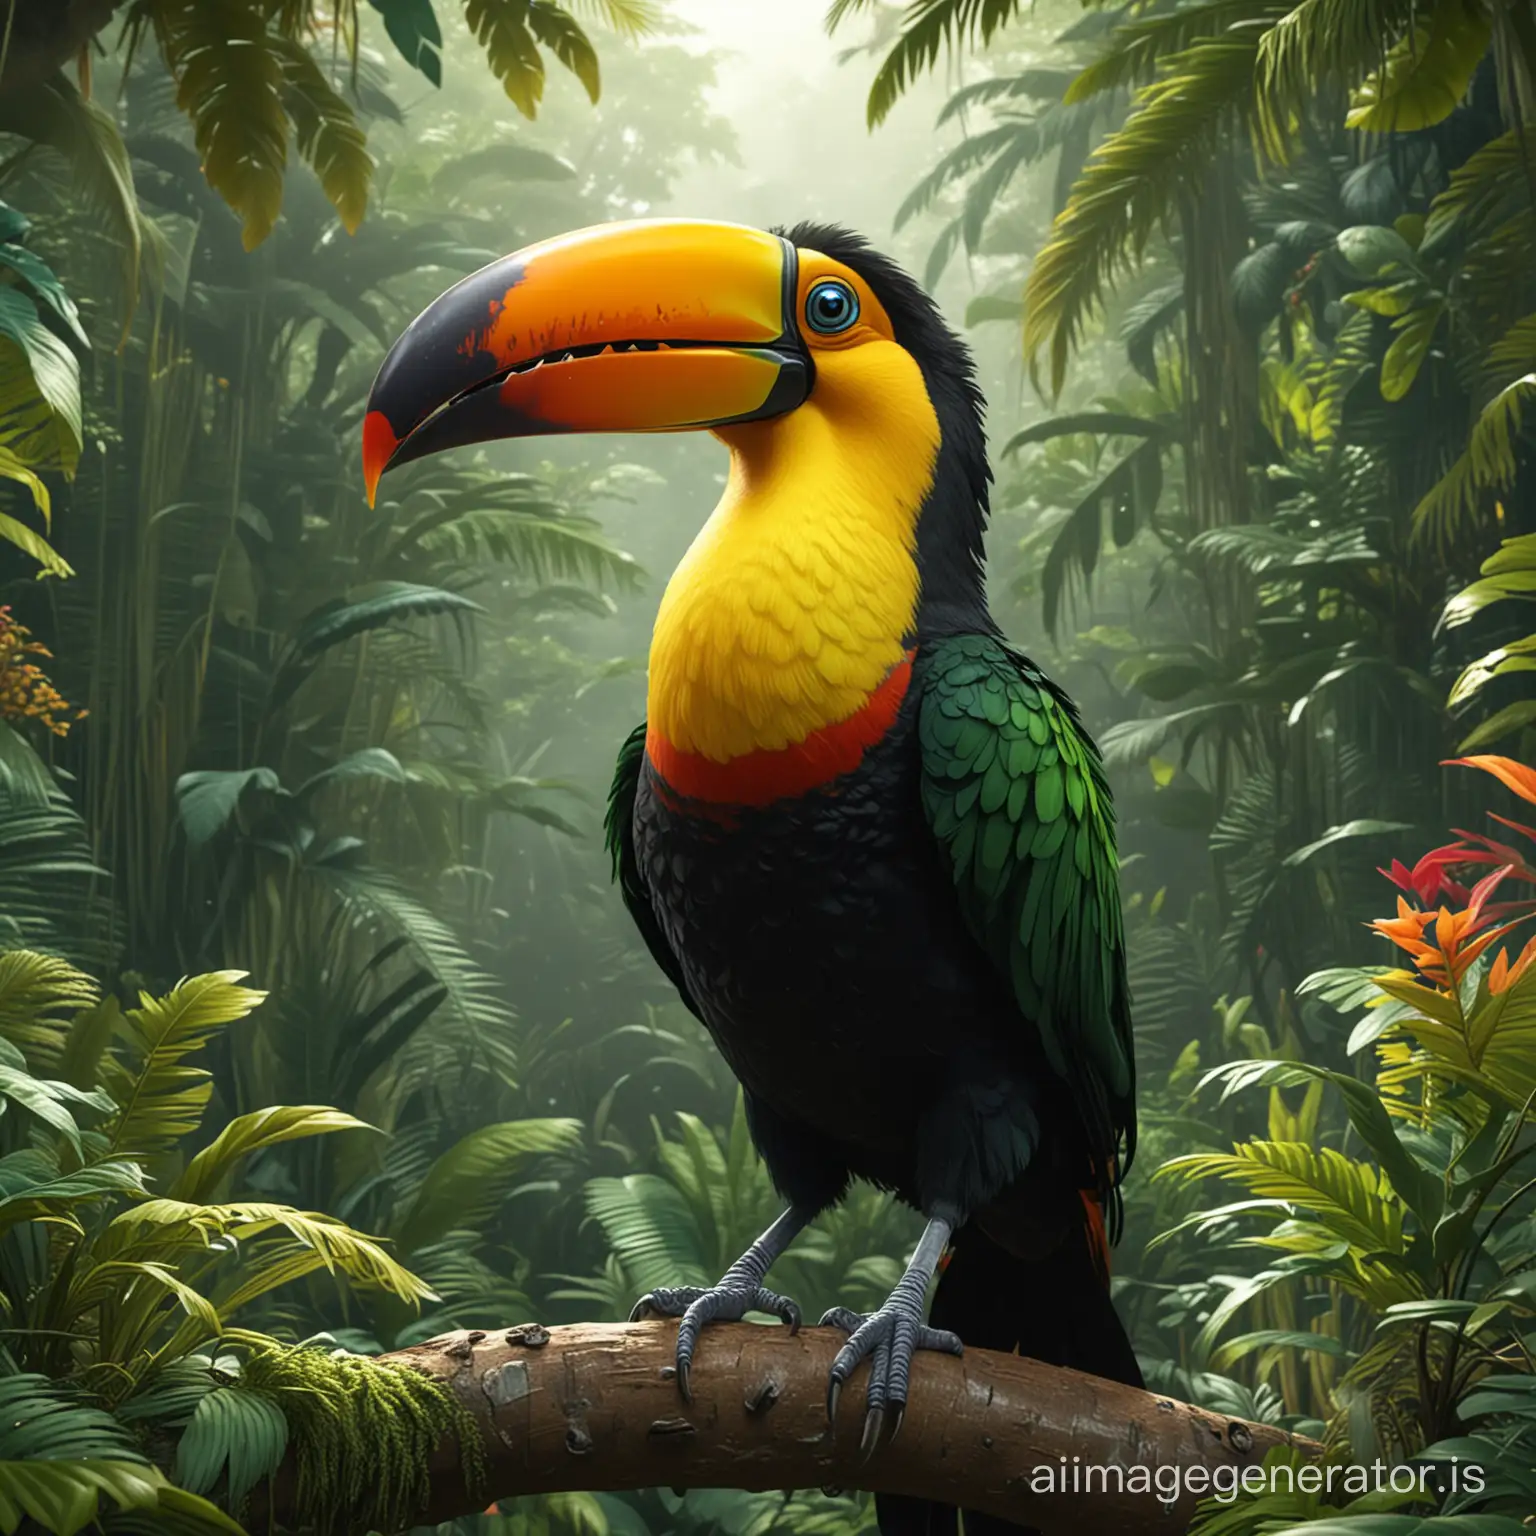 Vibrant-Cartoon-Toucan-Bird-in-Lush-Jungle-Setting